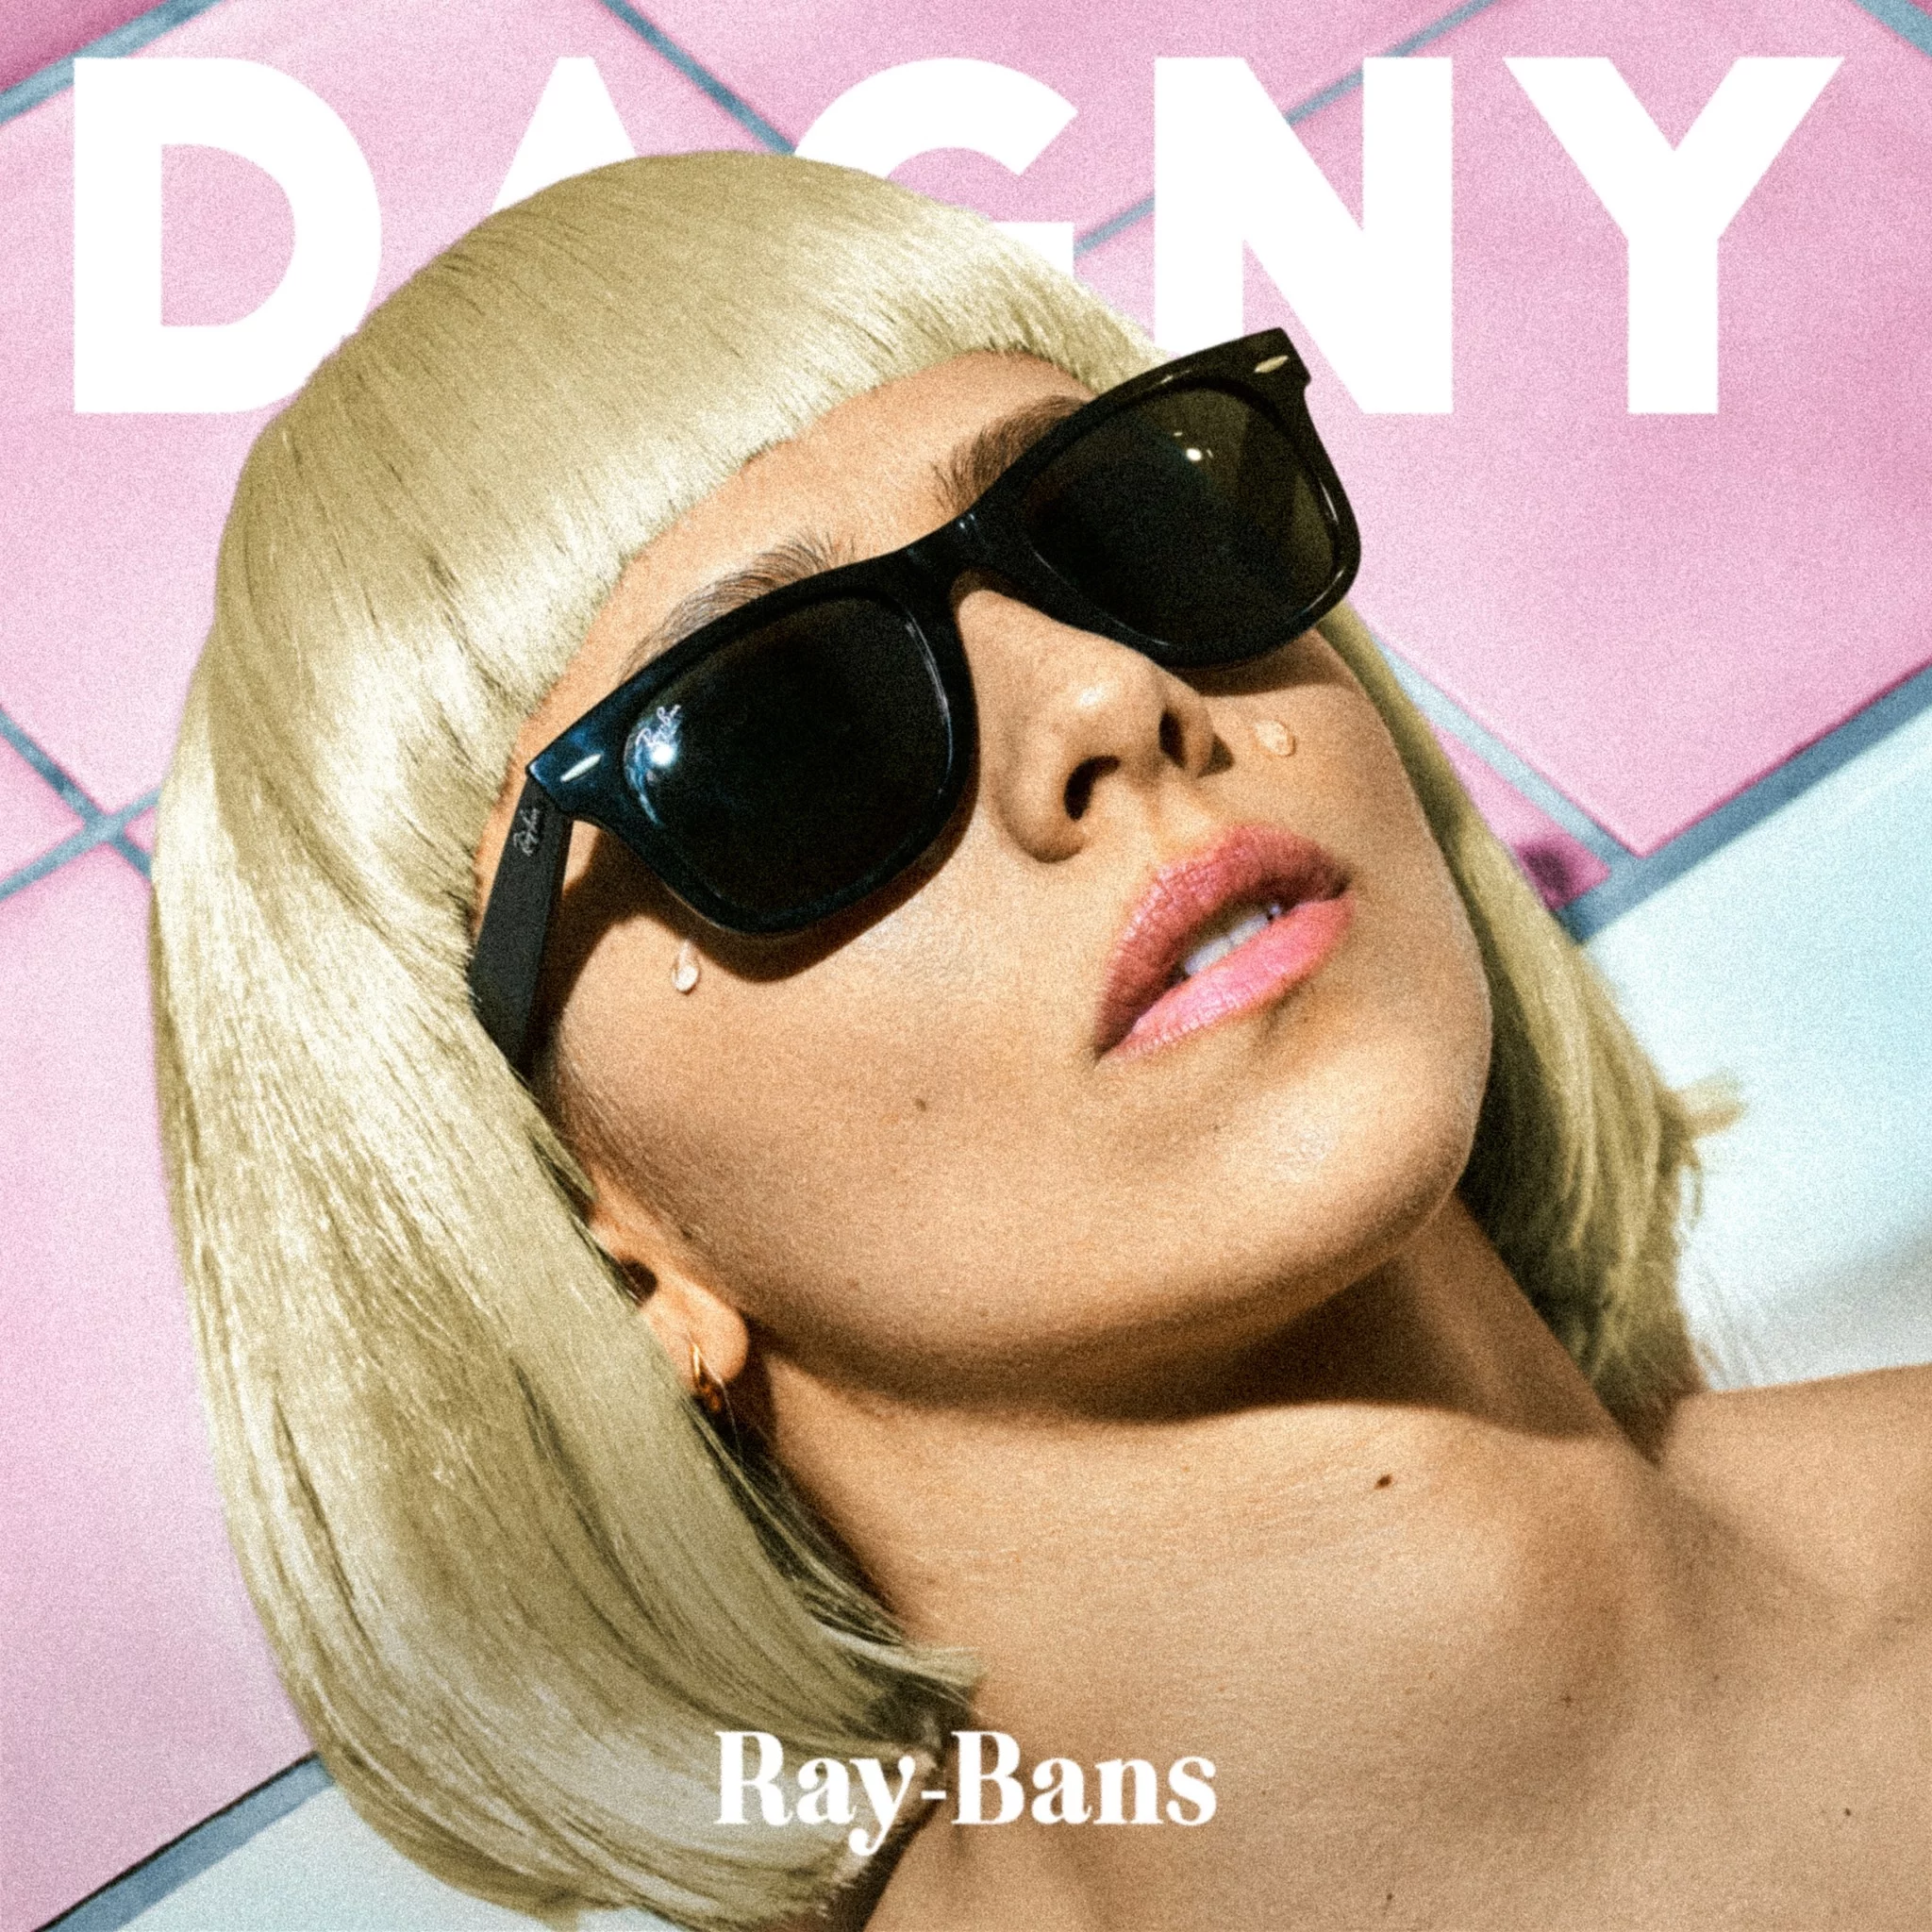 Dagny — Ray-Bans cover artwork